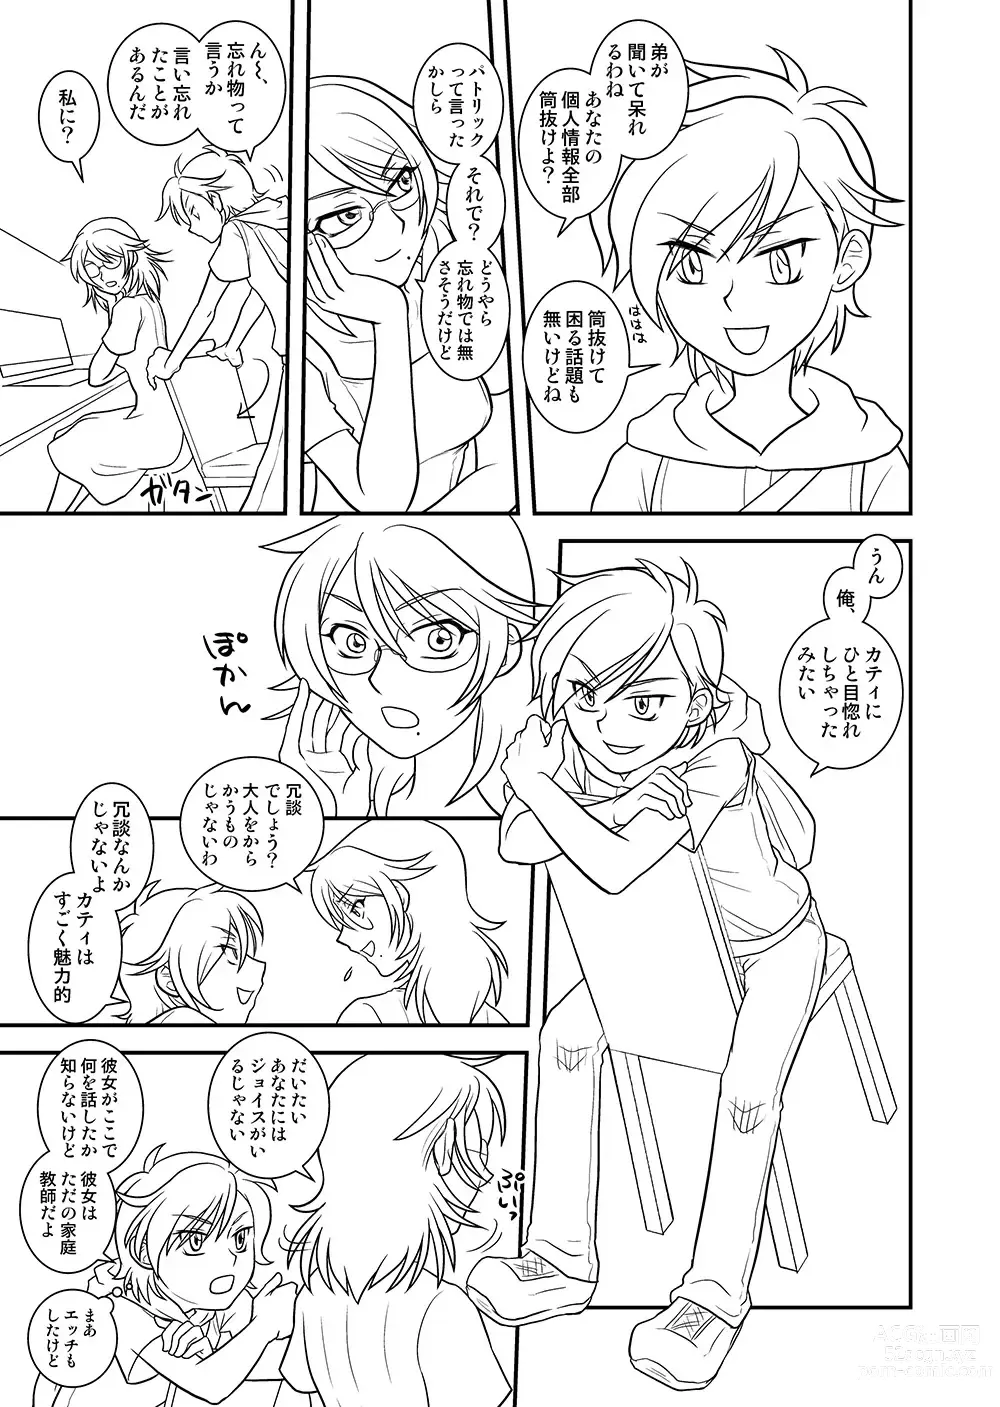 Page 6 of doujinshi Taisa to Ore.